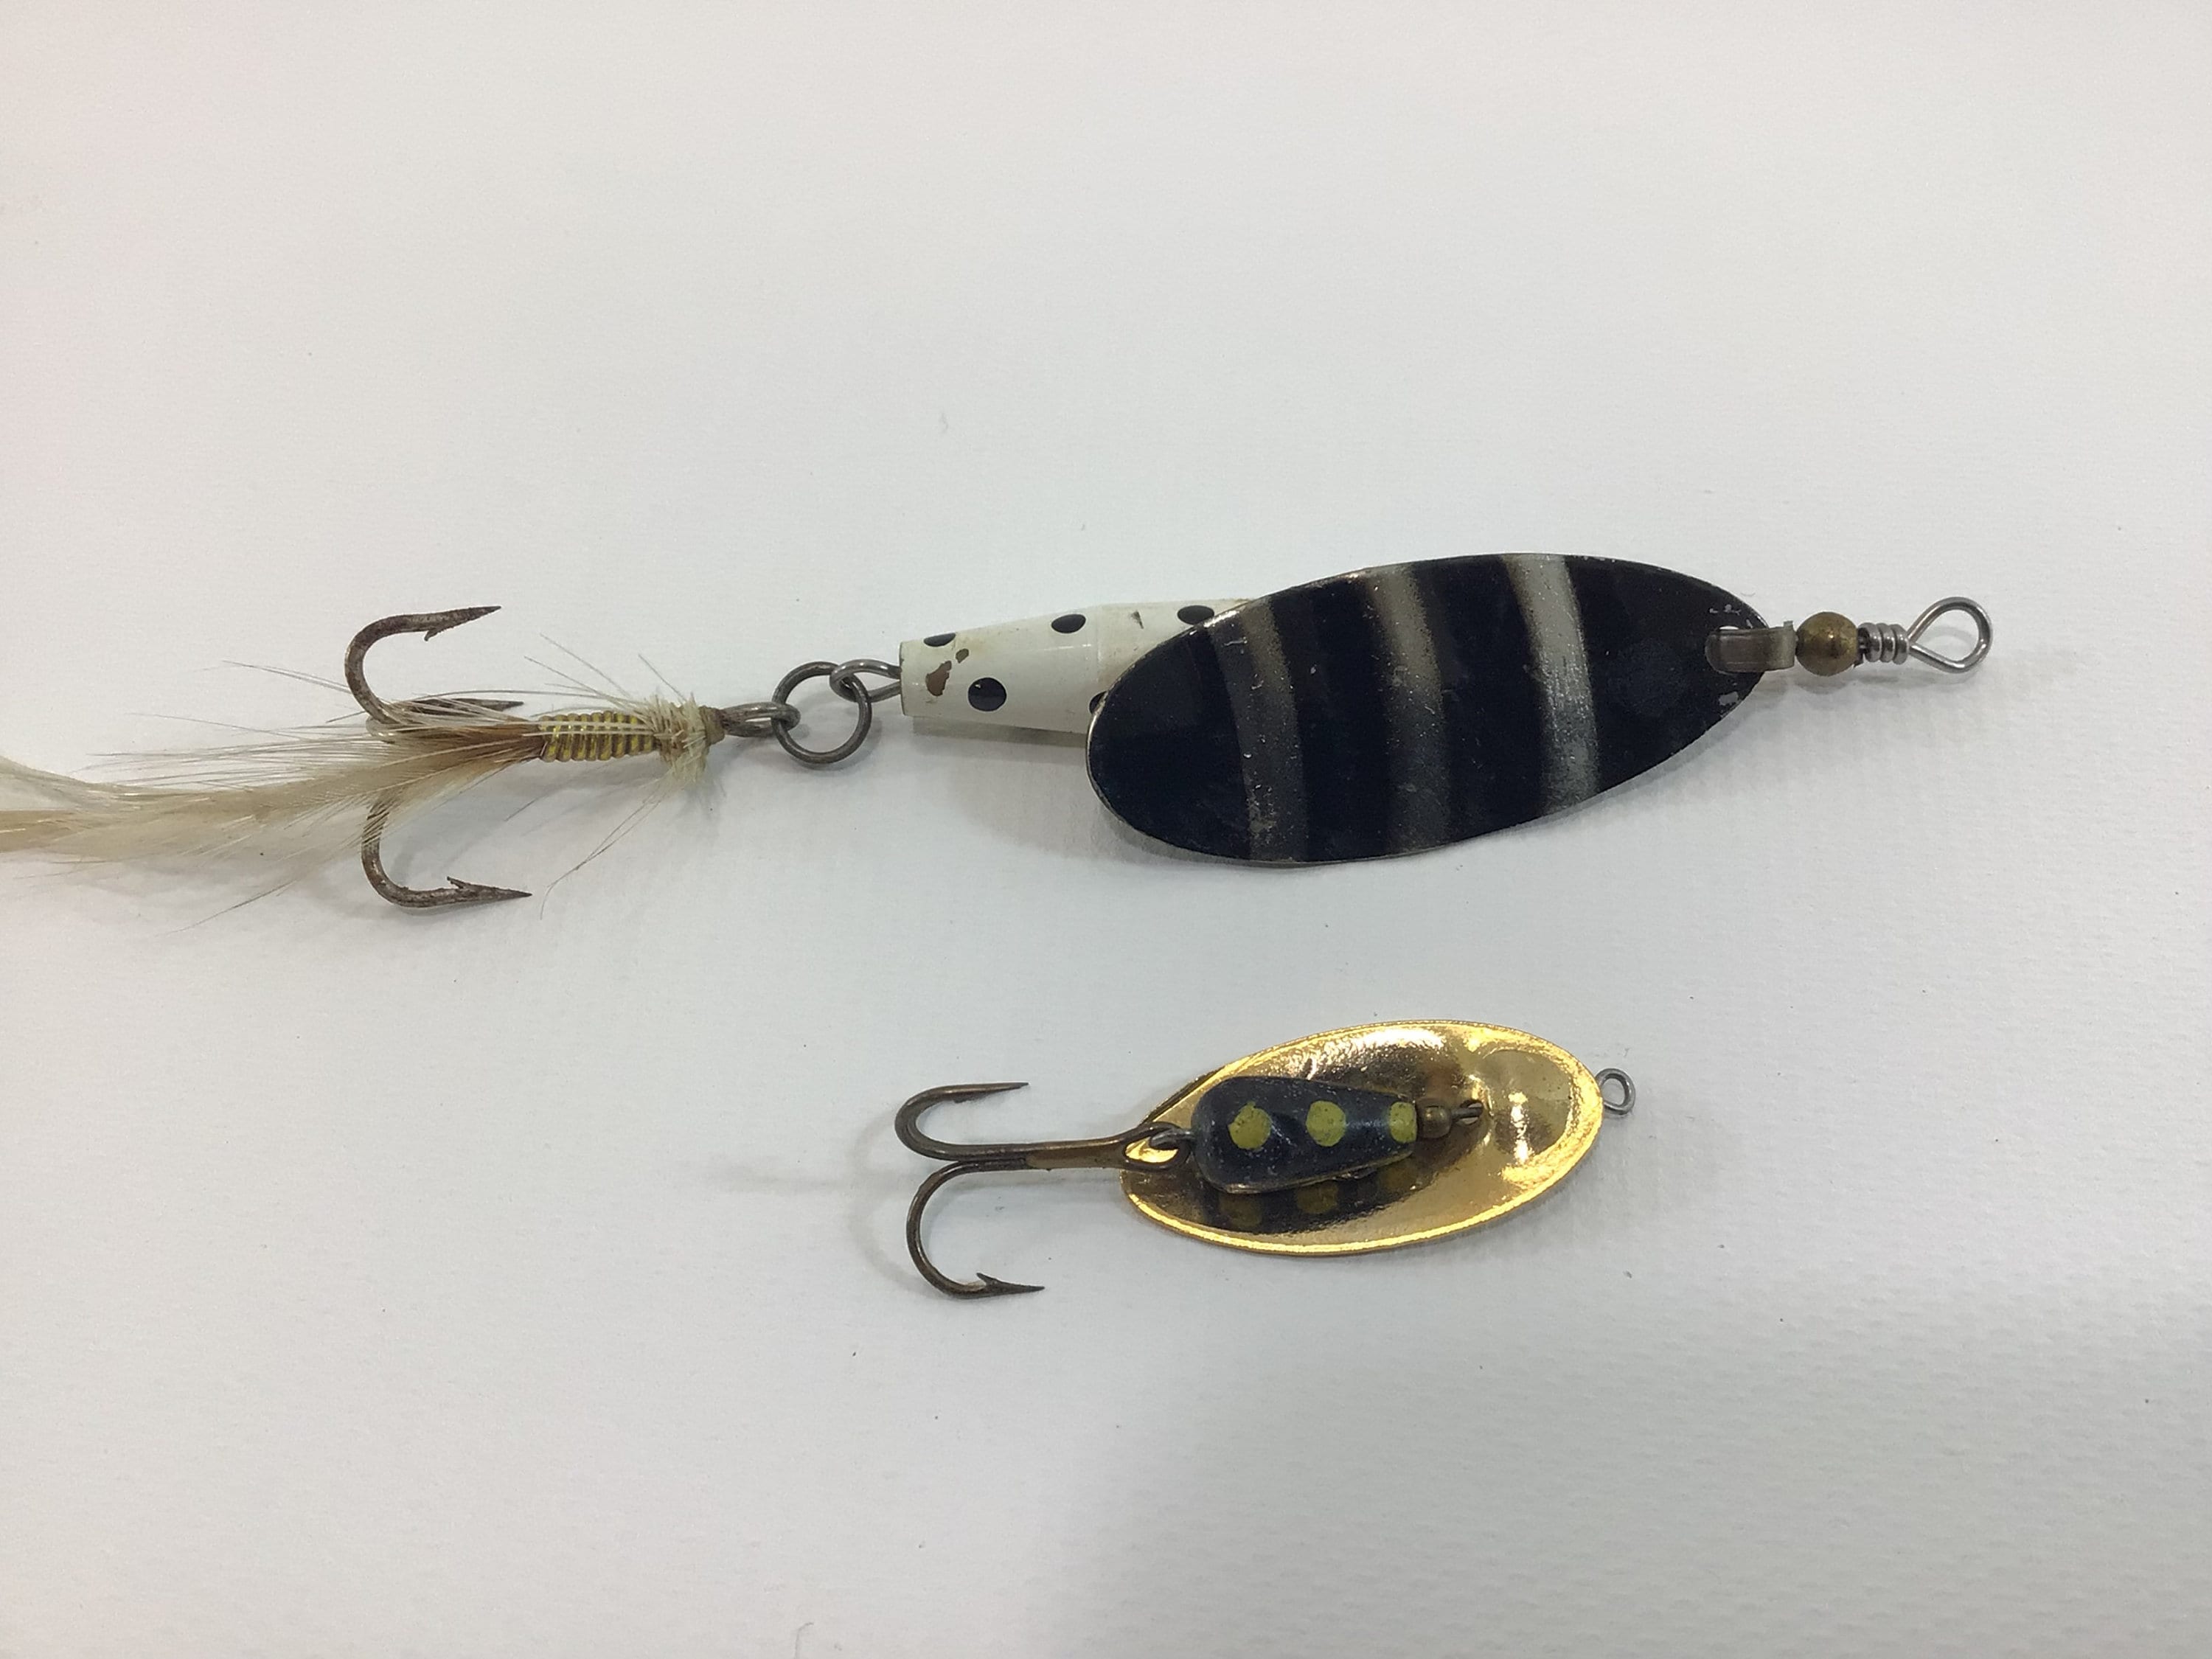 Vintage Fishing Tackle Spinner Lures Black Polka Dot and Martin No